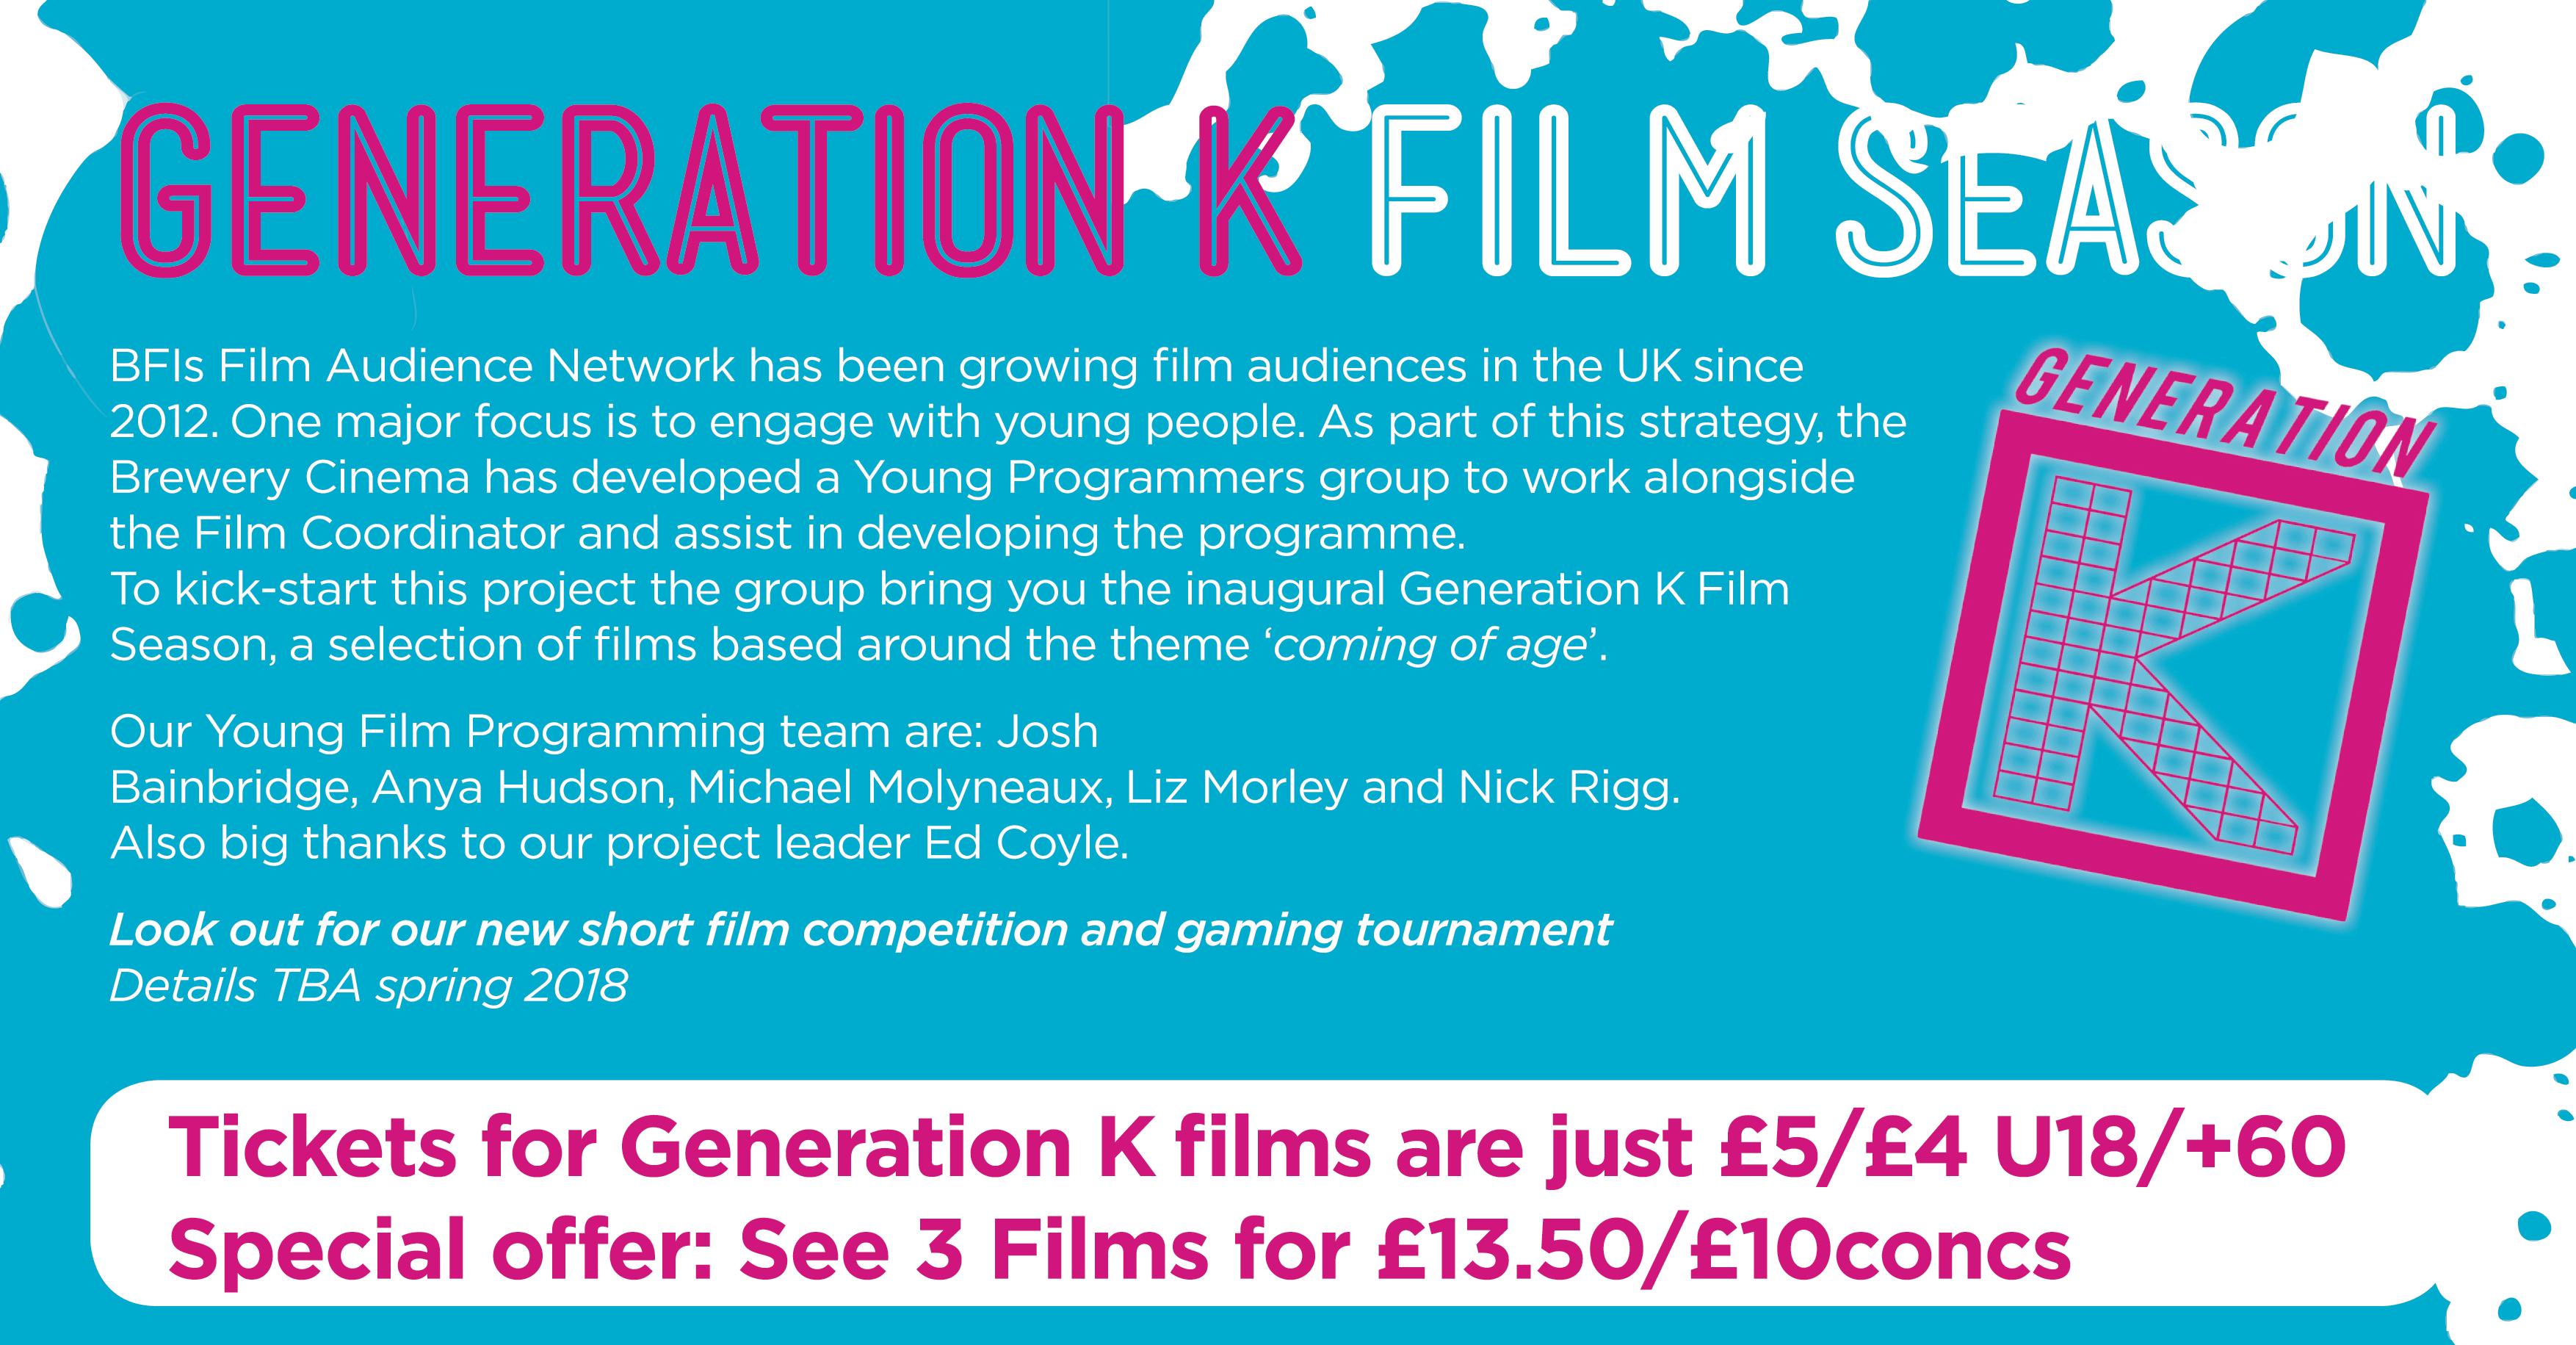 Generation K Film Festival Season Brewery Cinema Young Film Programmers